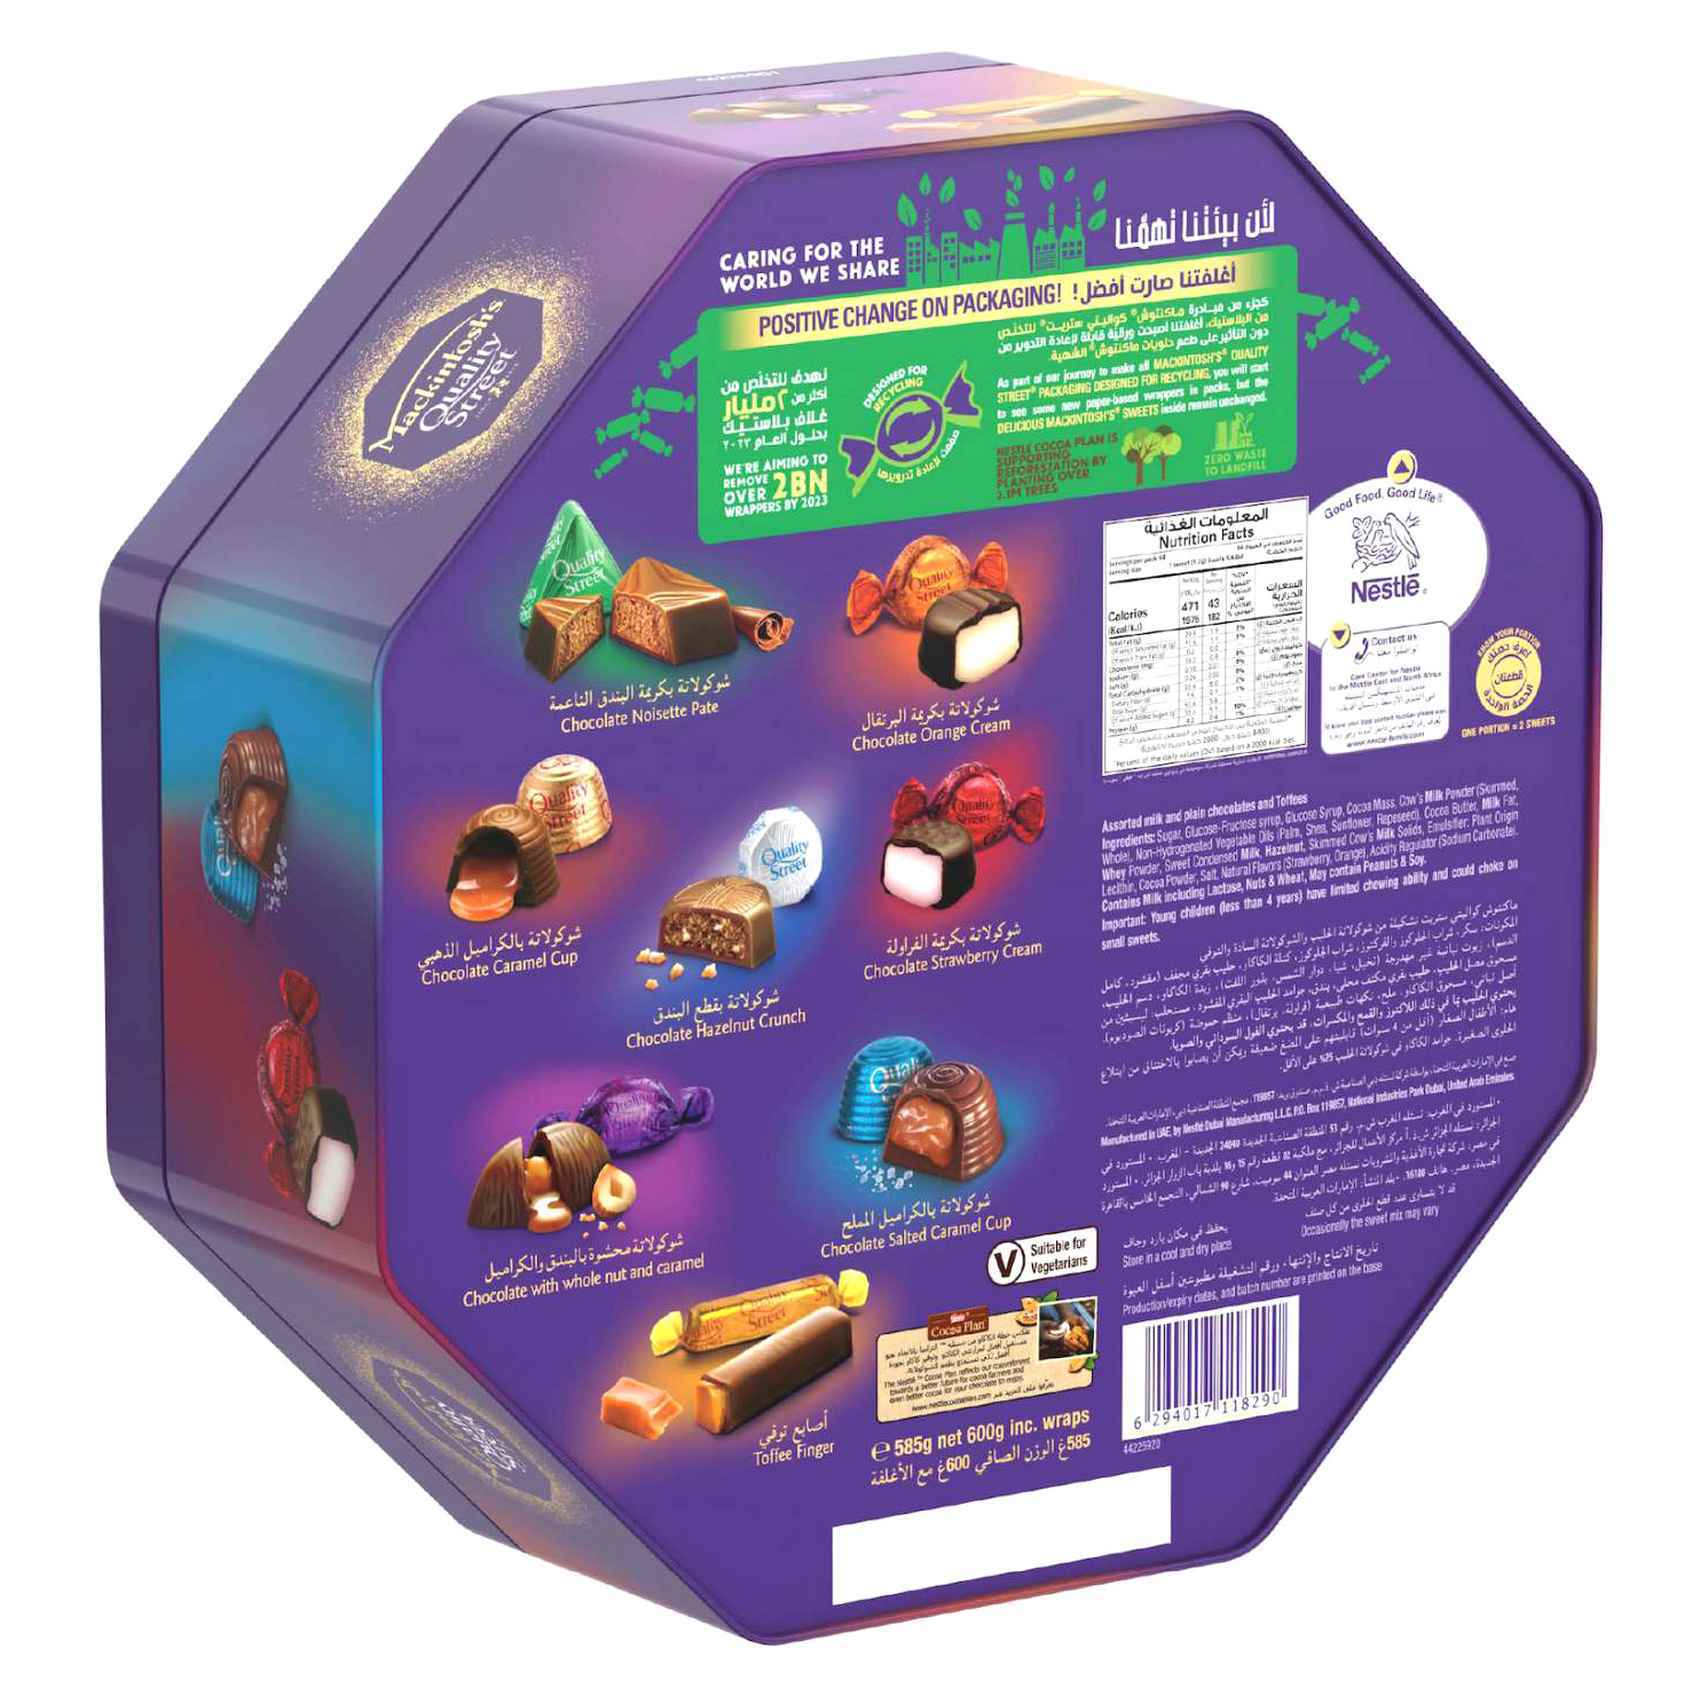 Quality Street Coffrets de Chocolat et Bonbons 480 g: Buy Online at Best  Price in Egypt - Souq is now